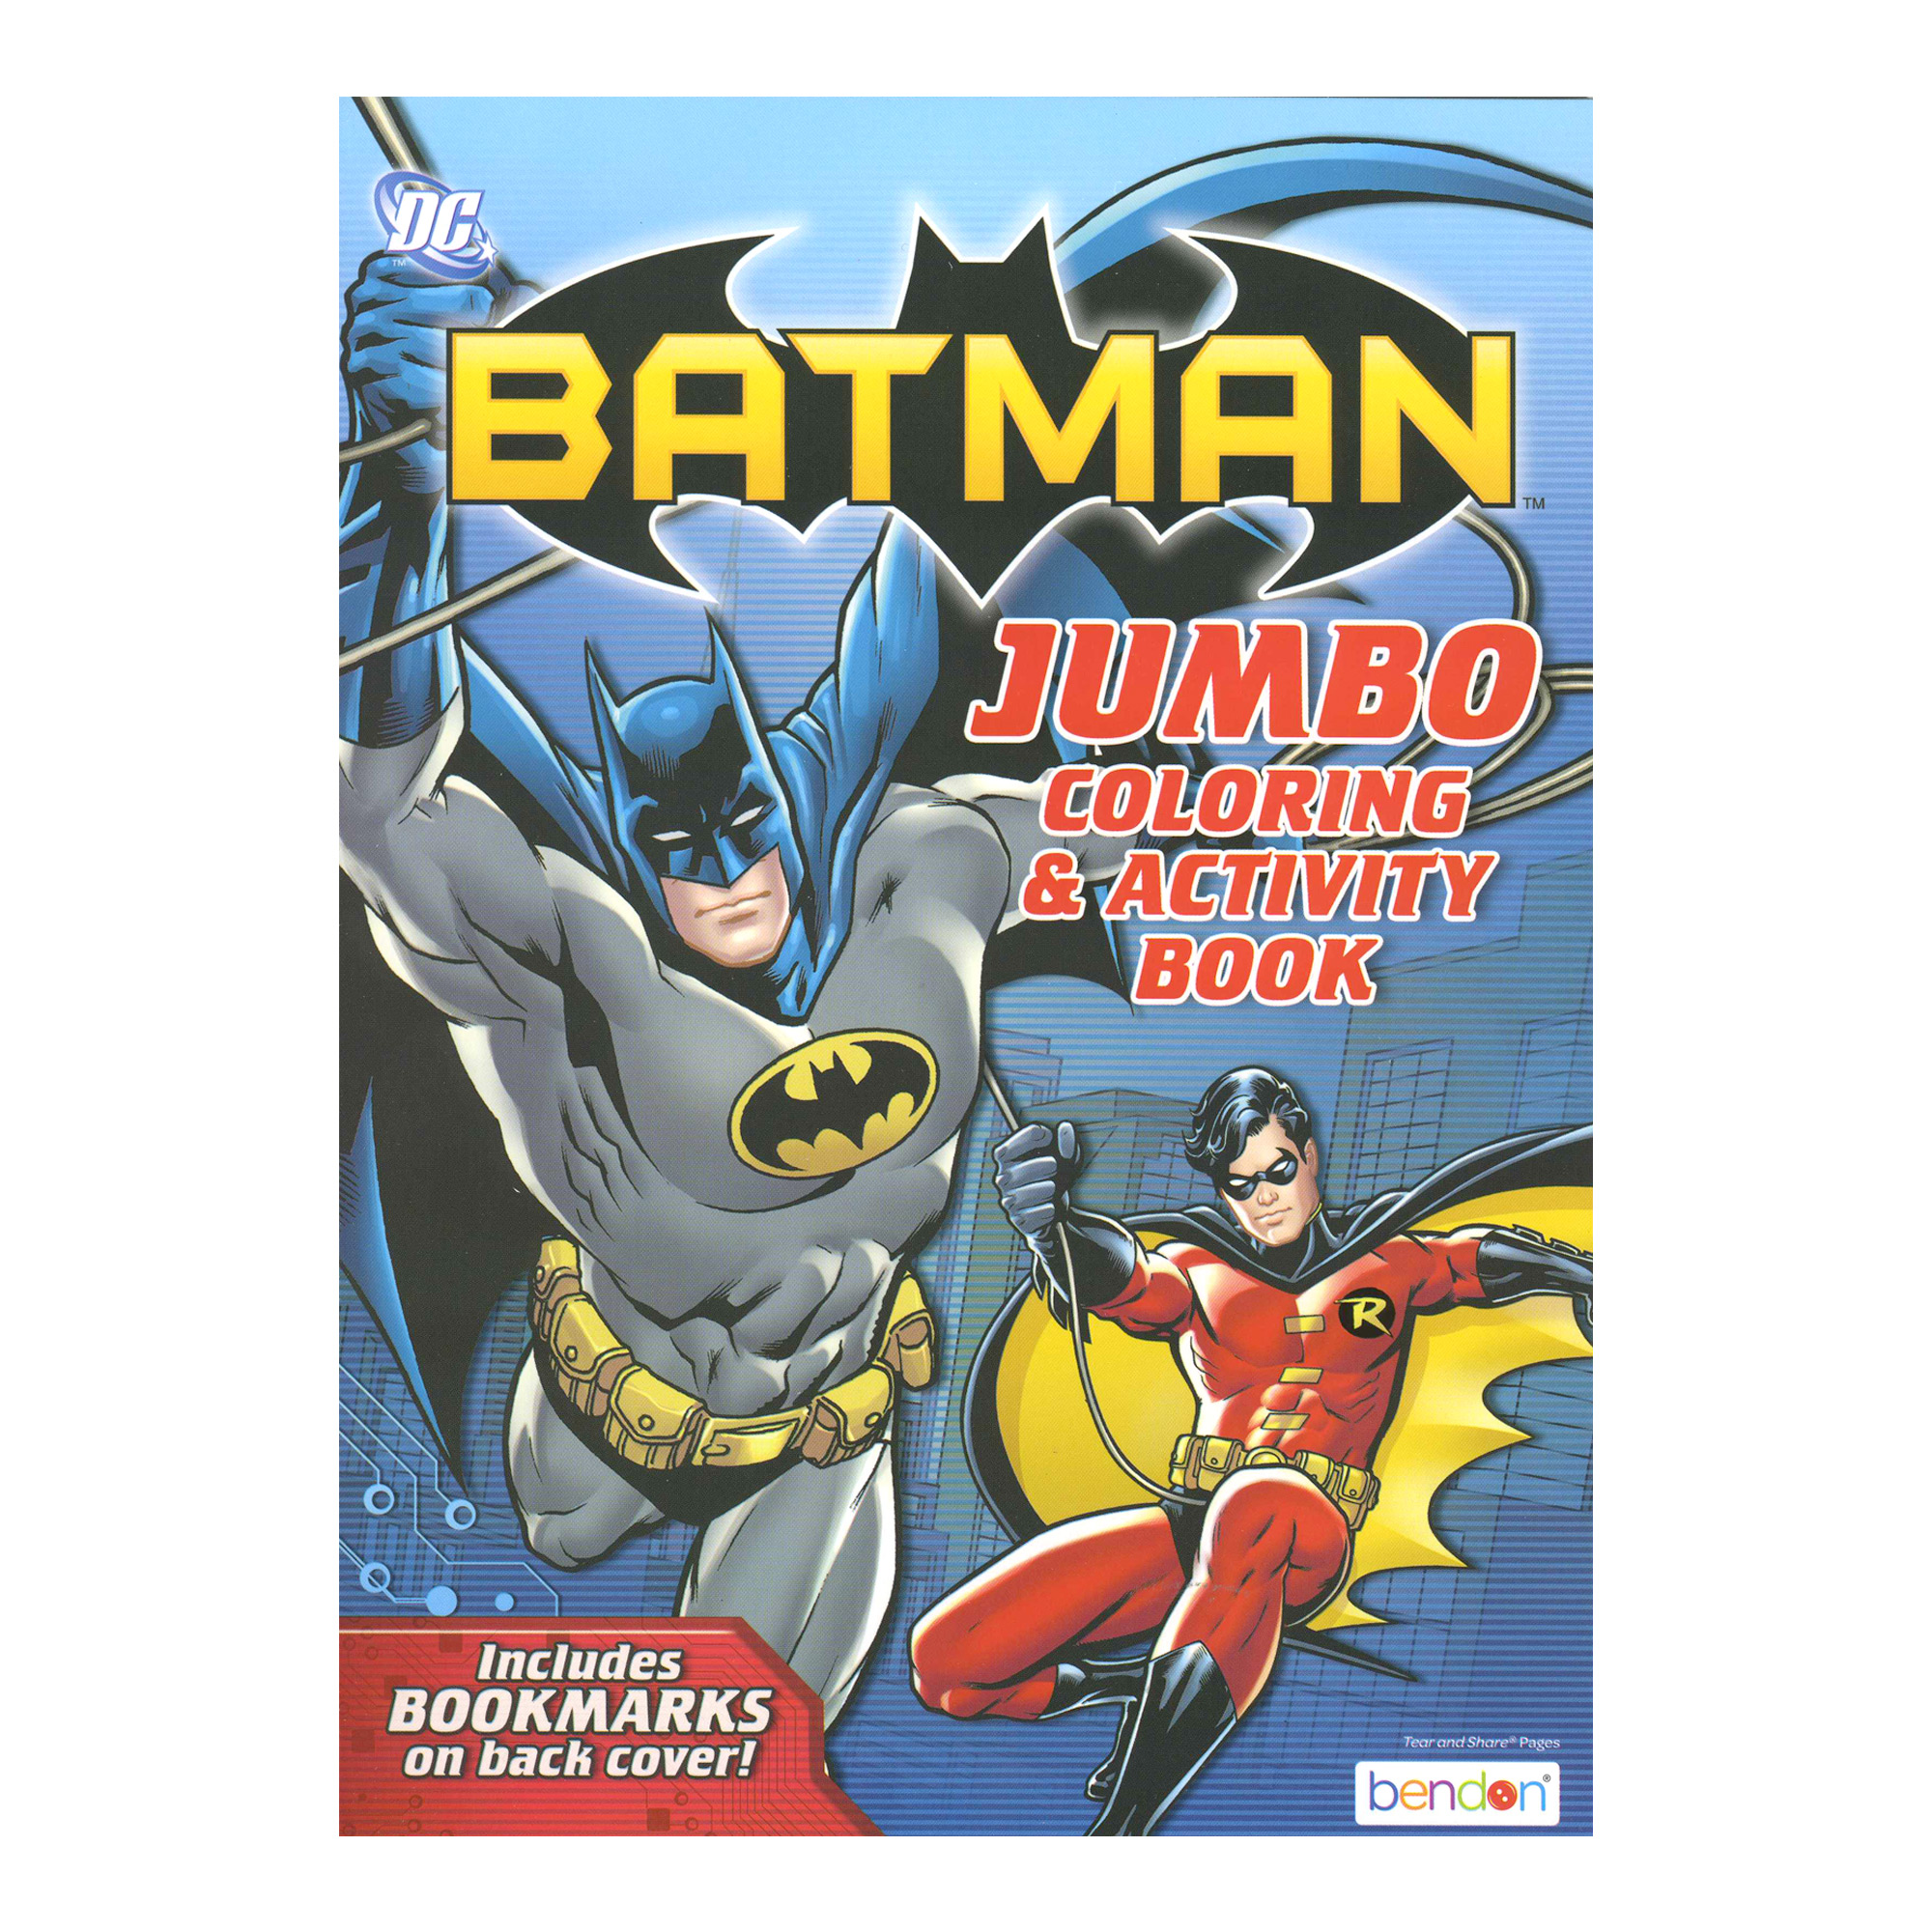 12 Pack Batman Play Pack- 2 Assortments- Crayon, Sticker Sheet & Coloring Book